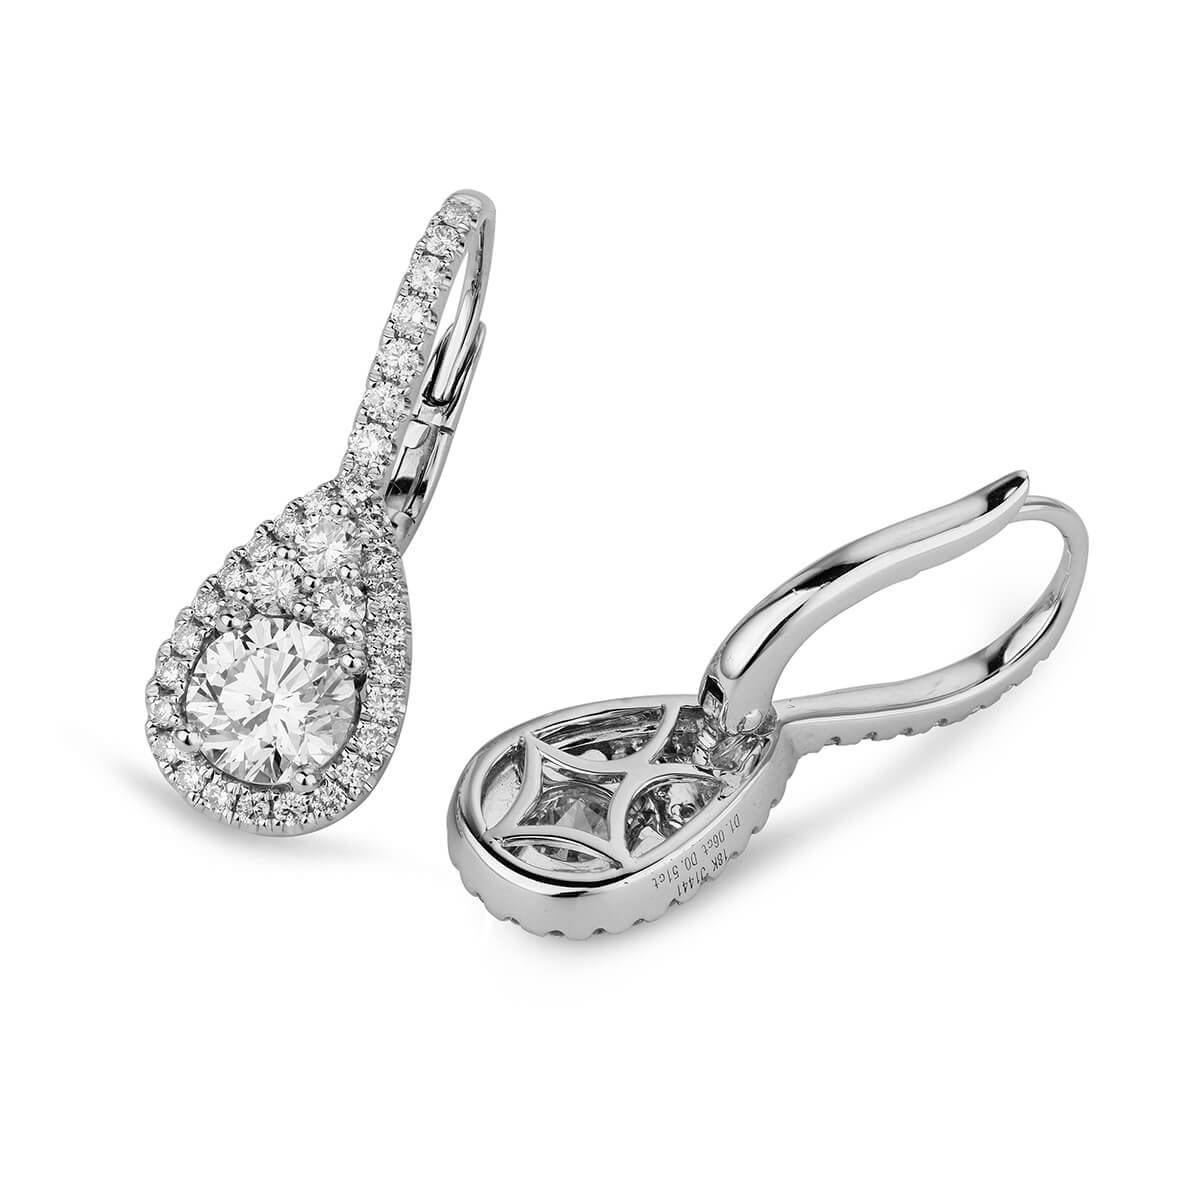  White Diamond Earrings, 2.06 Ct. TW, Round shape